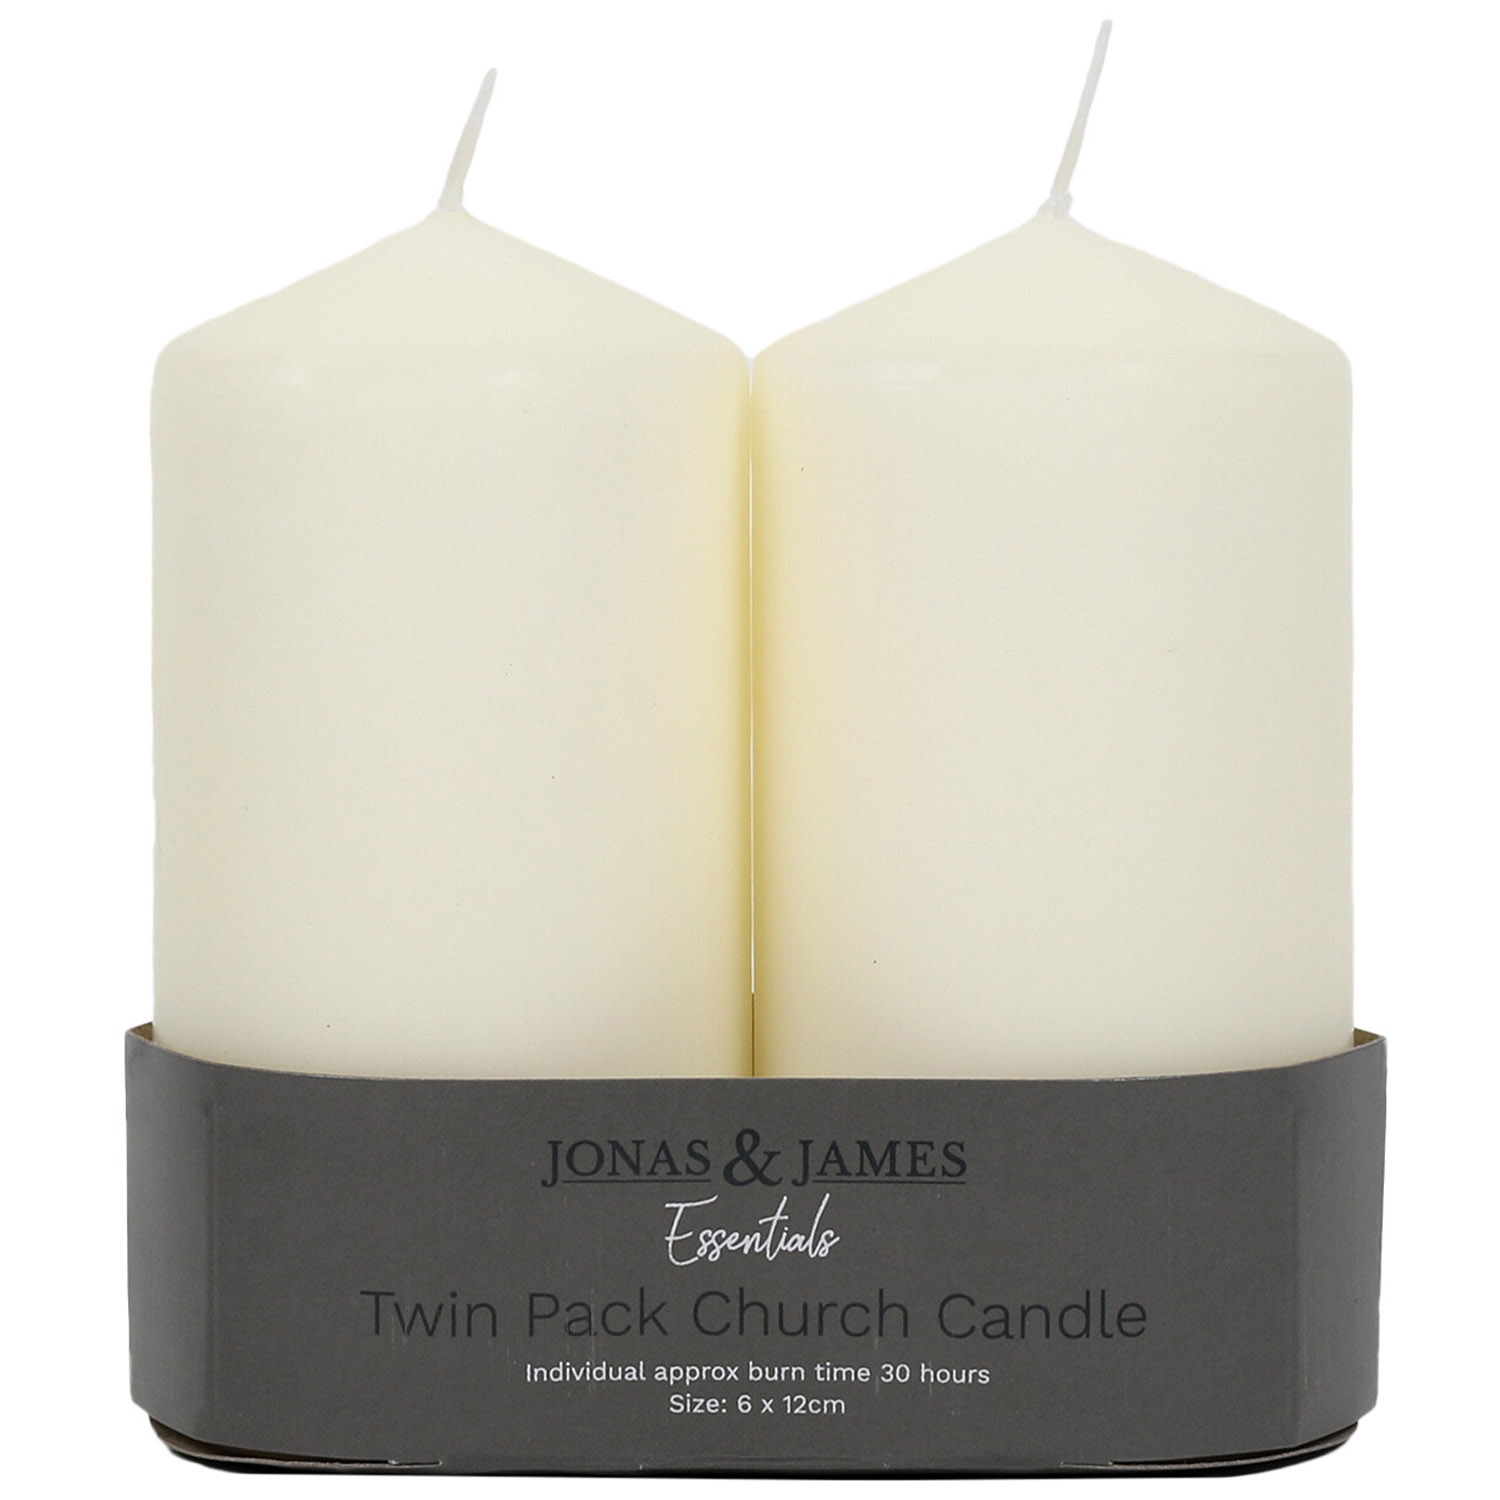 Jonas and James Natural Church Candles 2 Pack Image 1